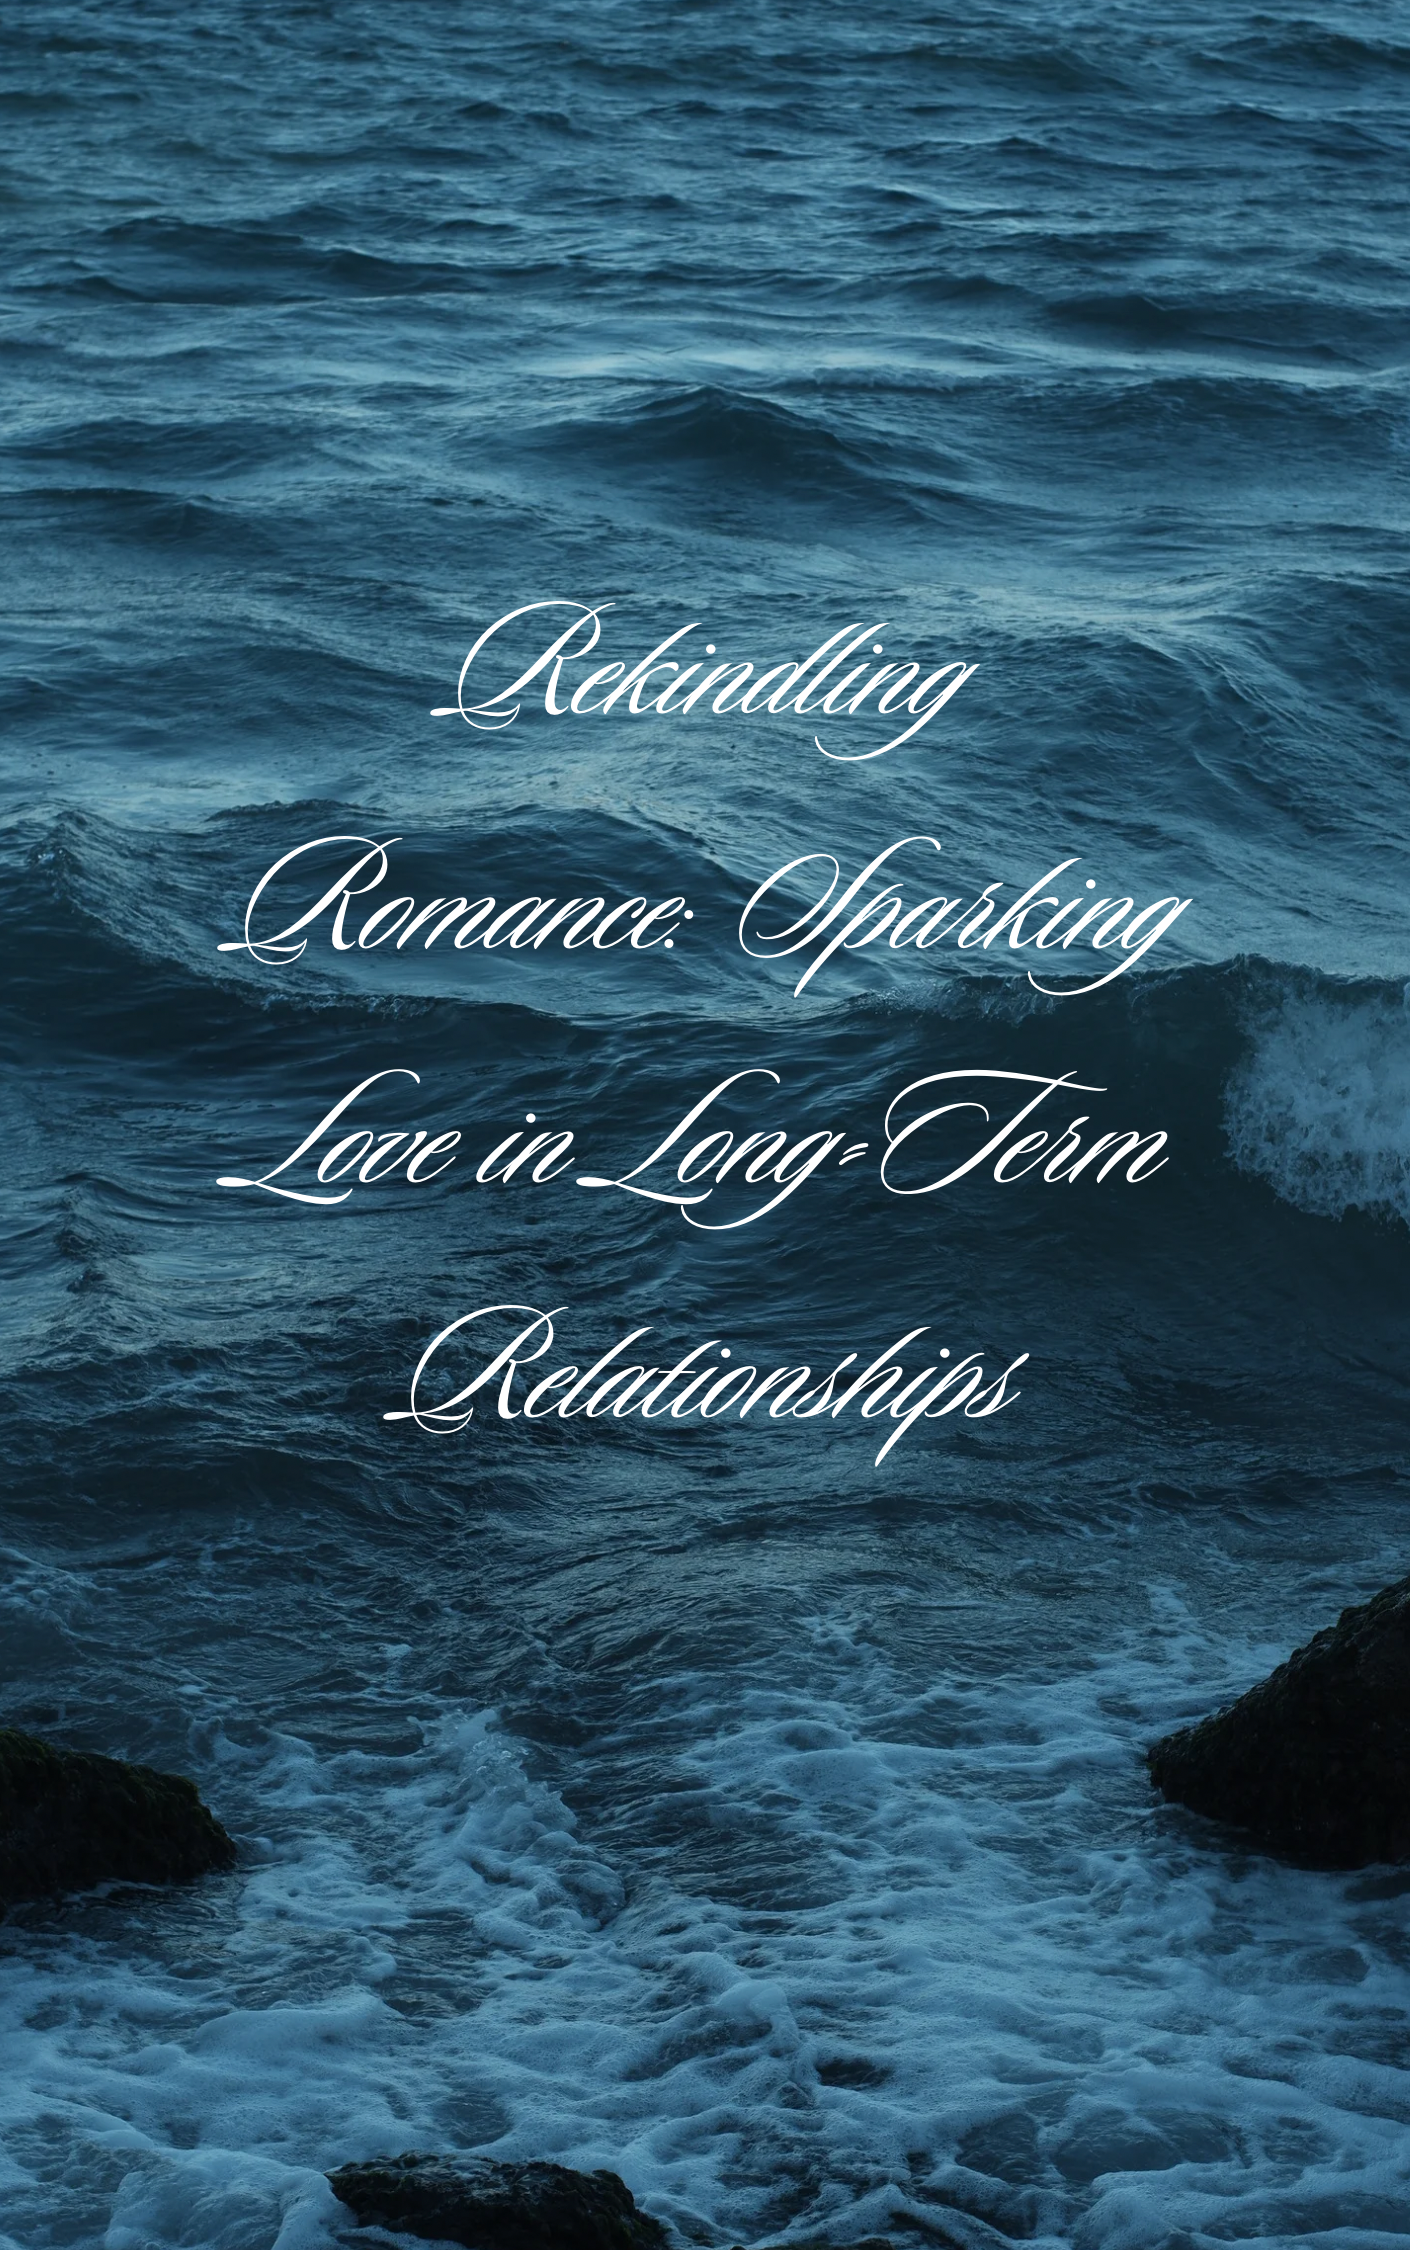 Rekindling Romance: Sparking Love in Long-Term Relationships